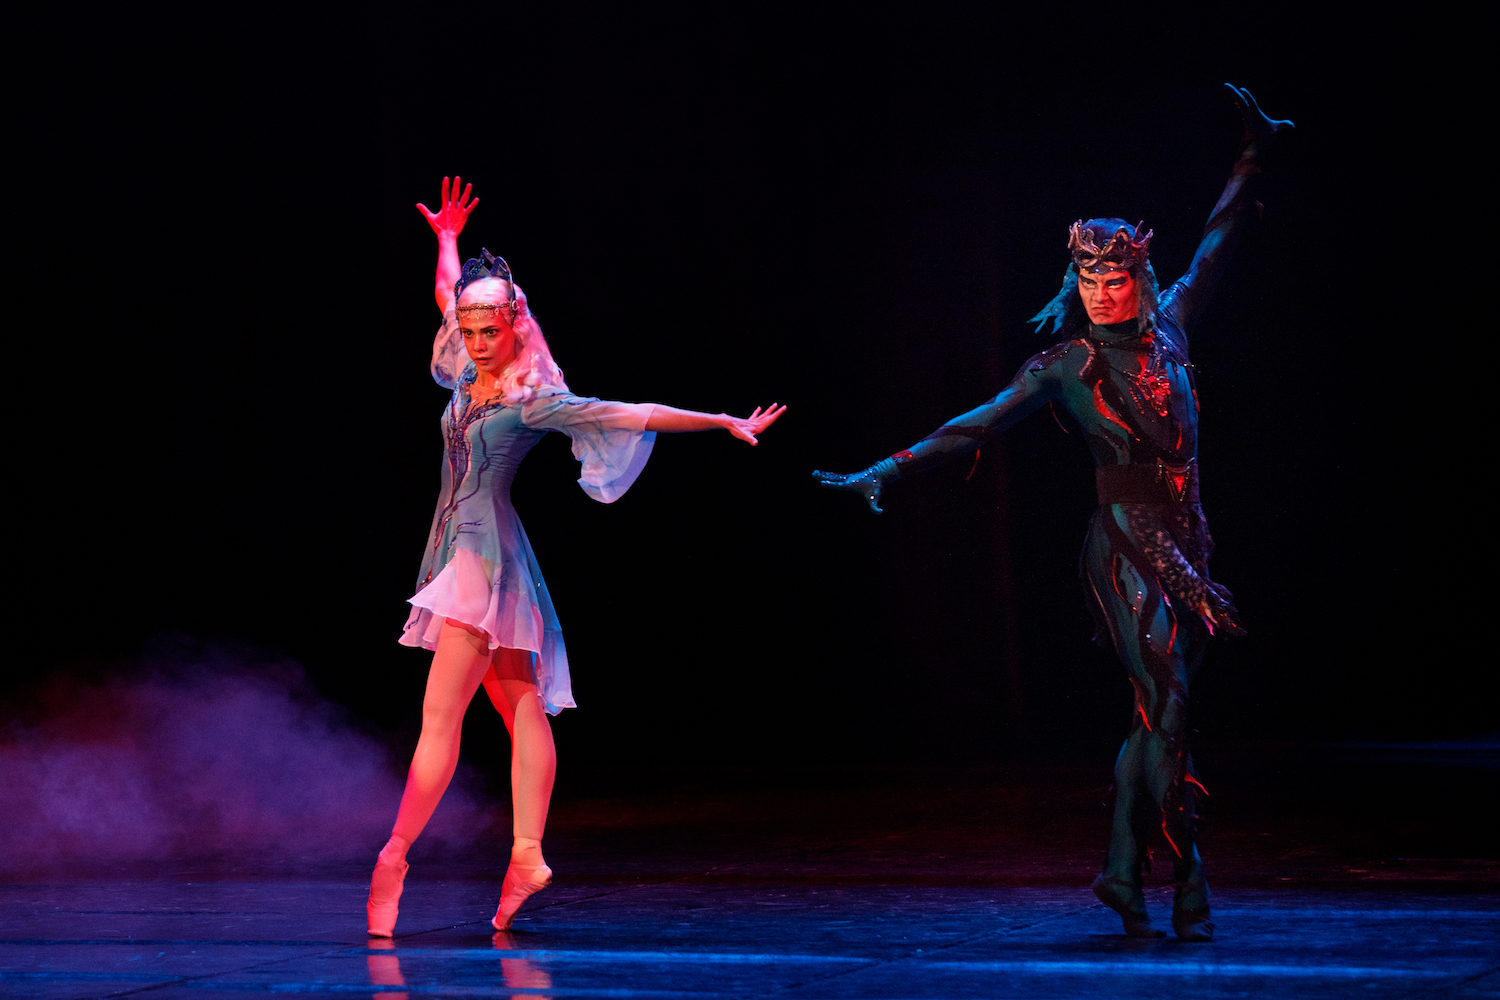 Forest Legend on stage. Image: Evgeny Nikiforov, Erik Sapaev Mari Theatre of Opera and Ballet